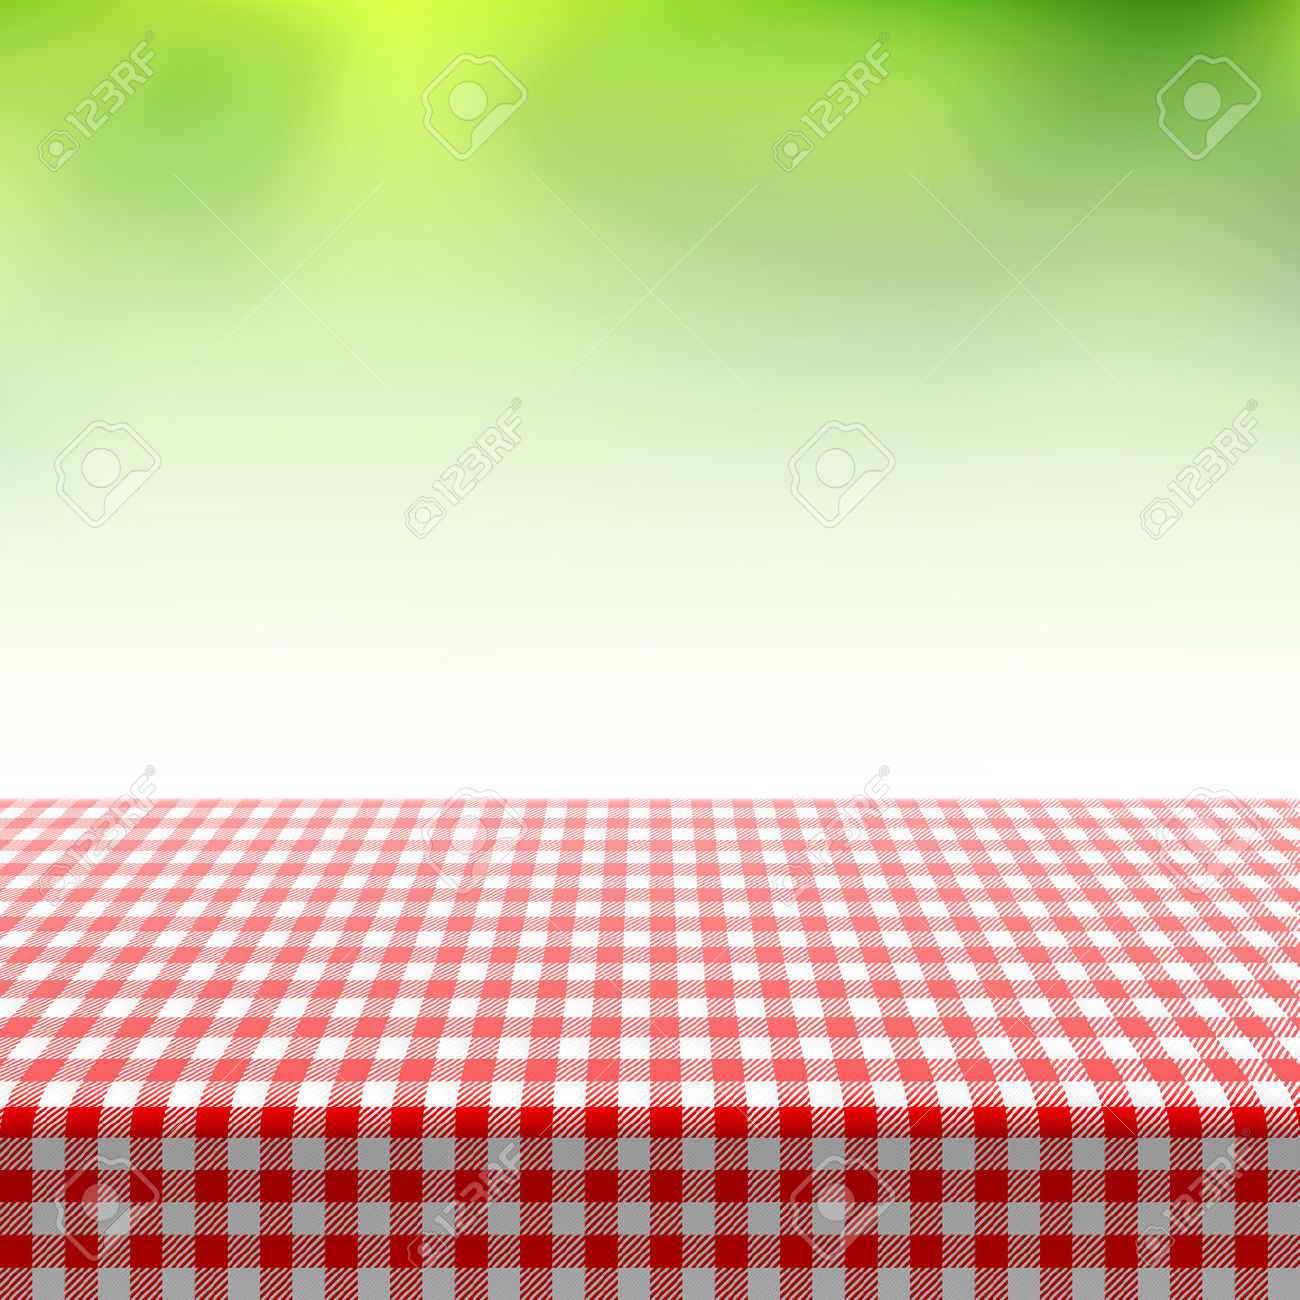 Free picnic tablecloth clipart 